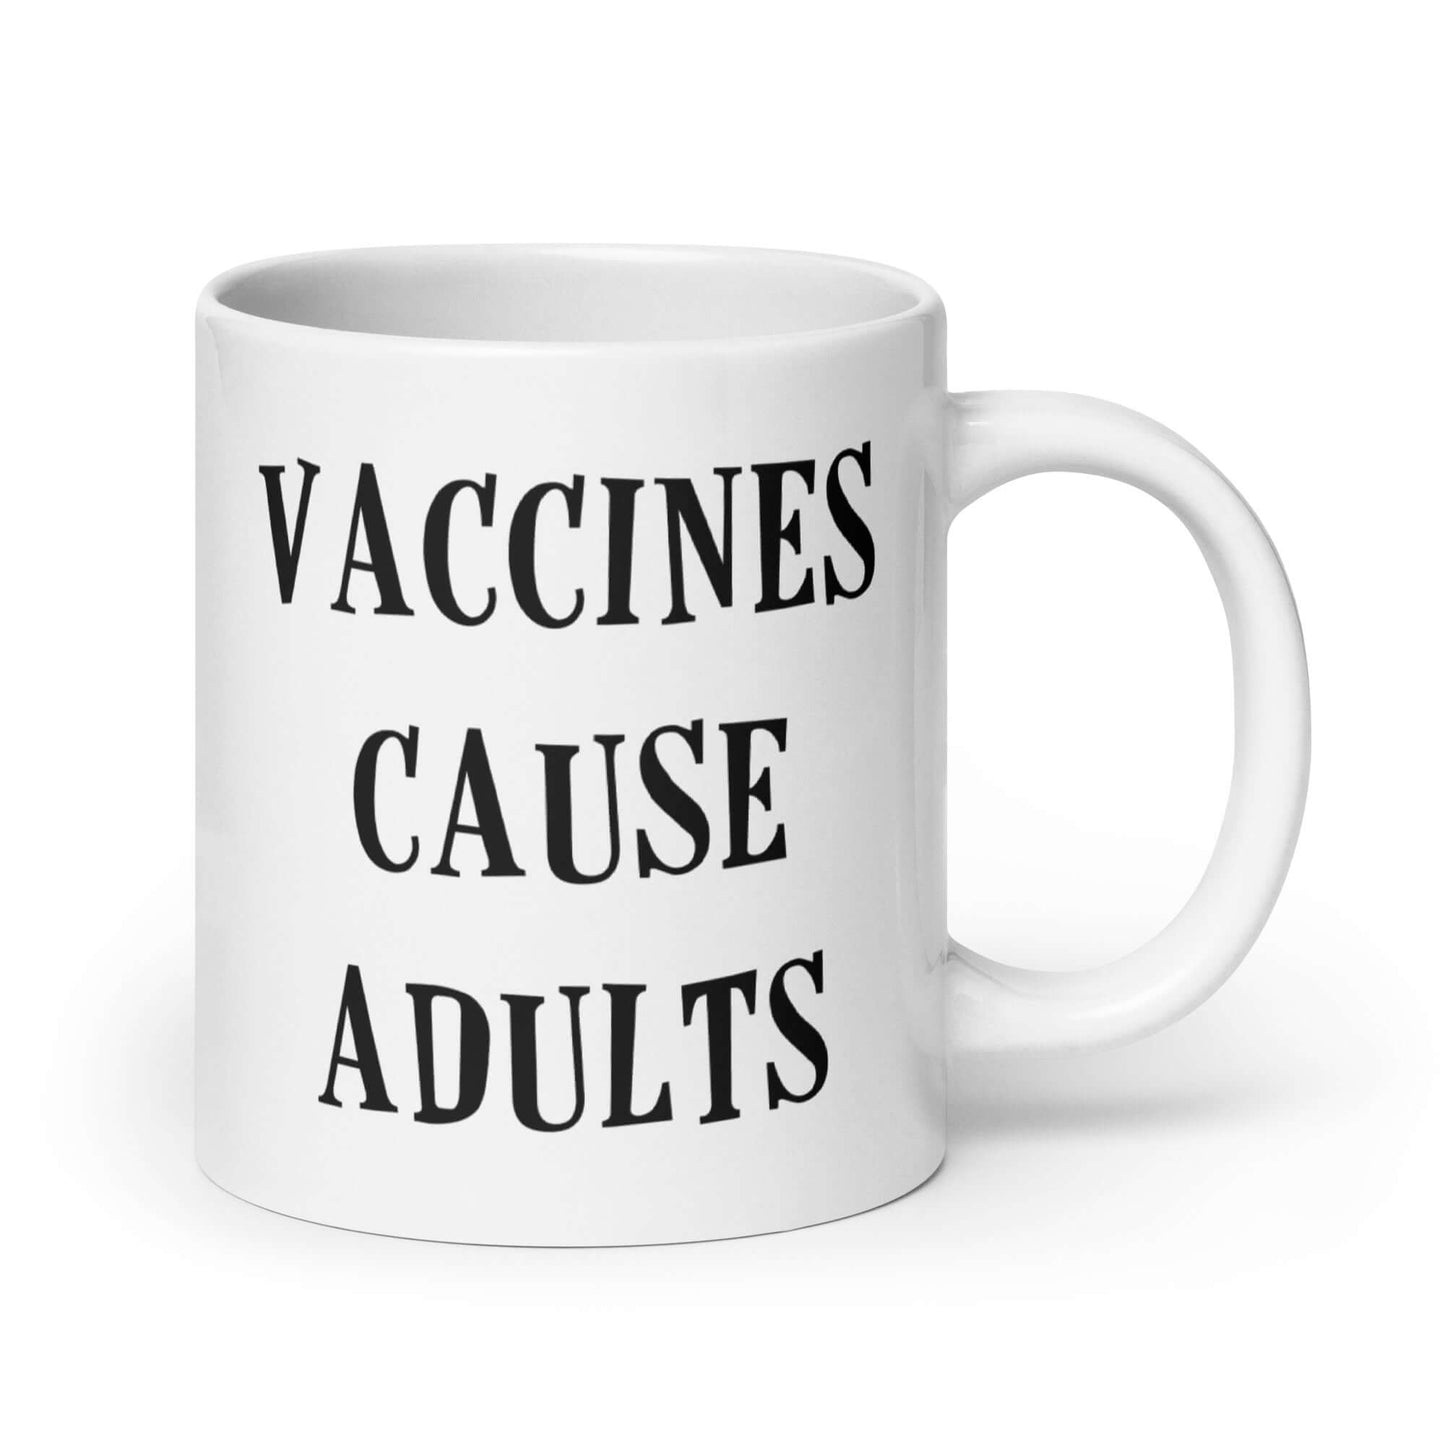 Vaccines cause adults funny anti-vaxer sarcastic mug